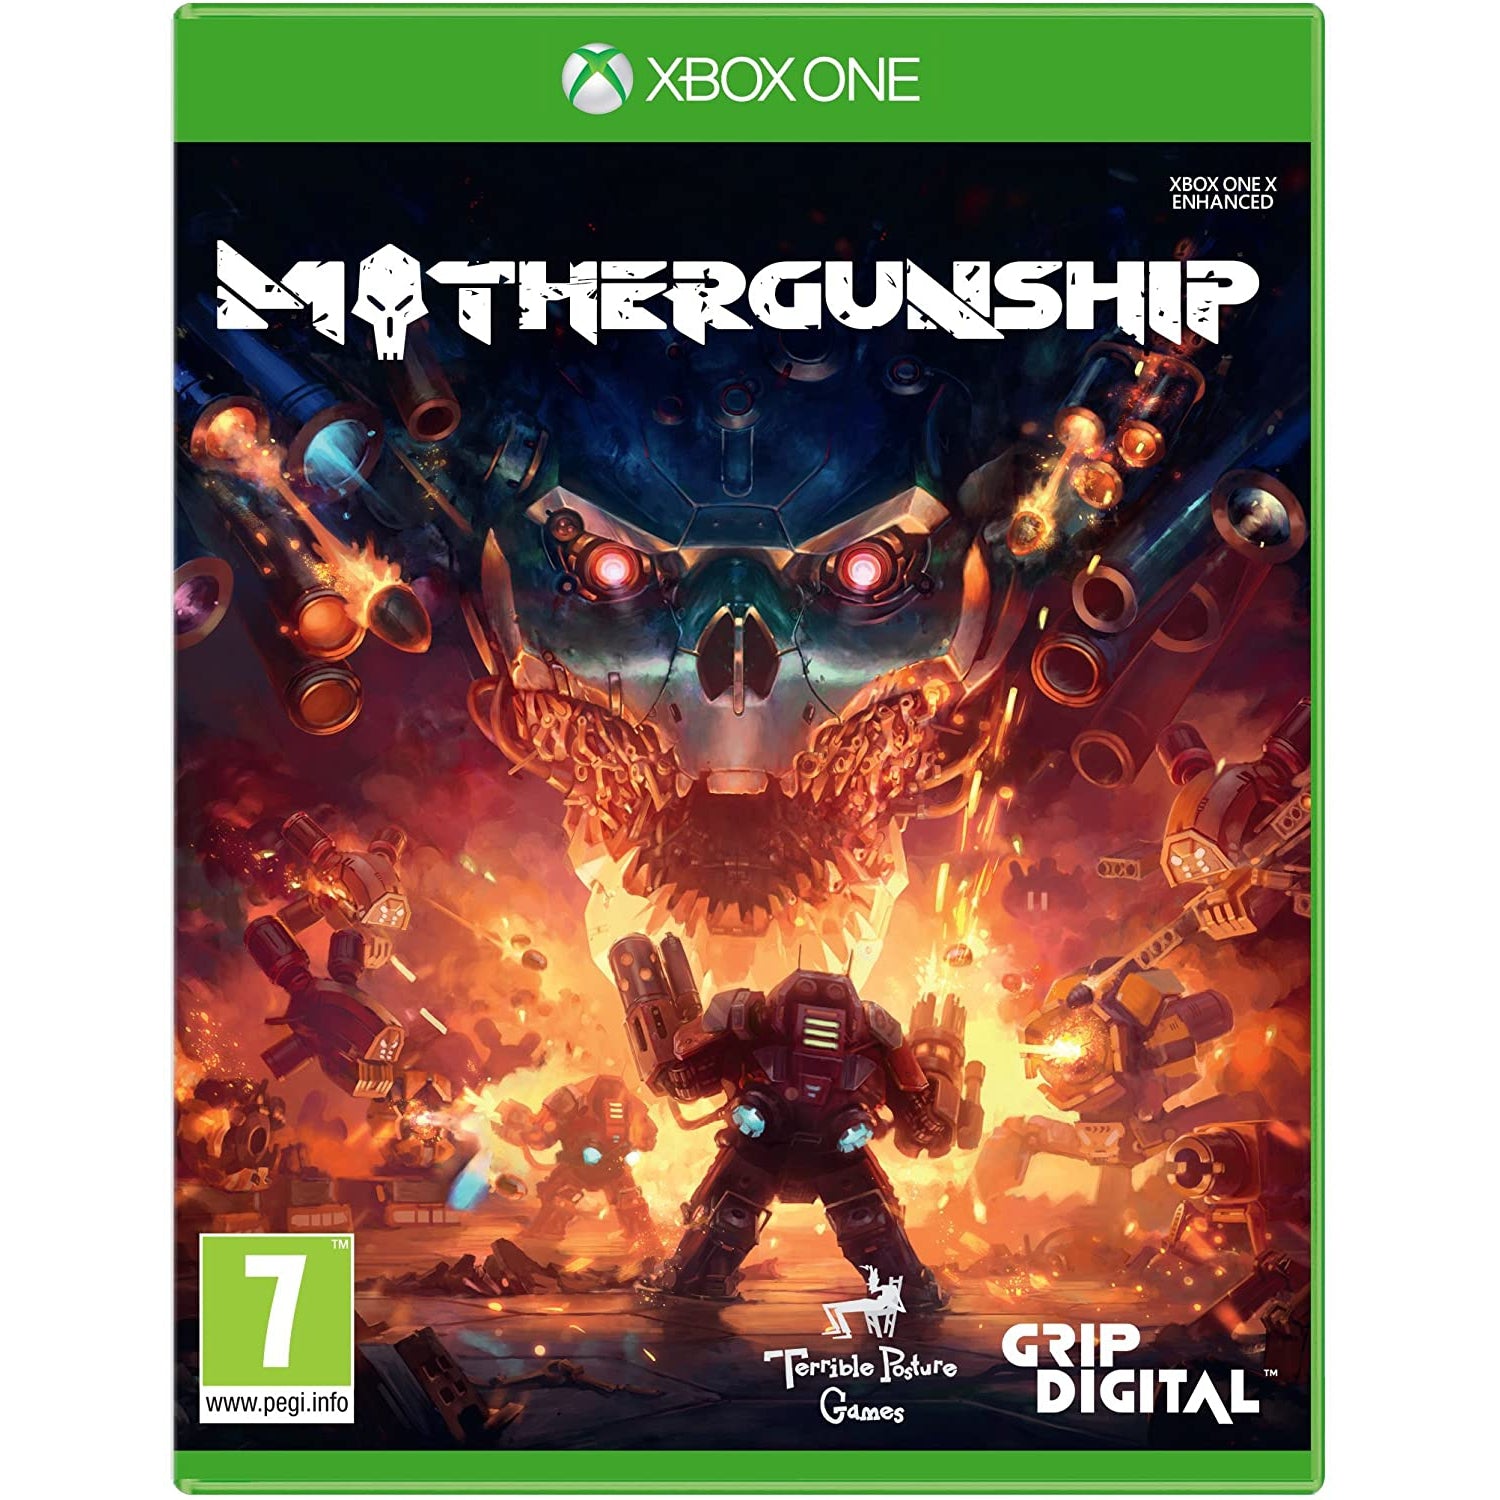 Mothergunship (Xbox One)